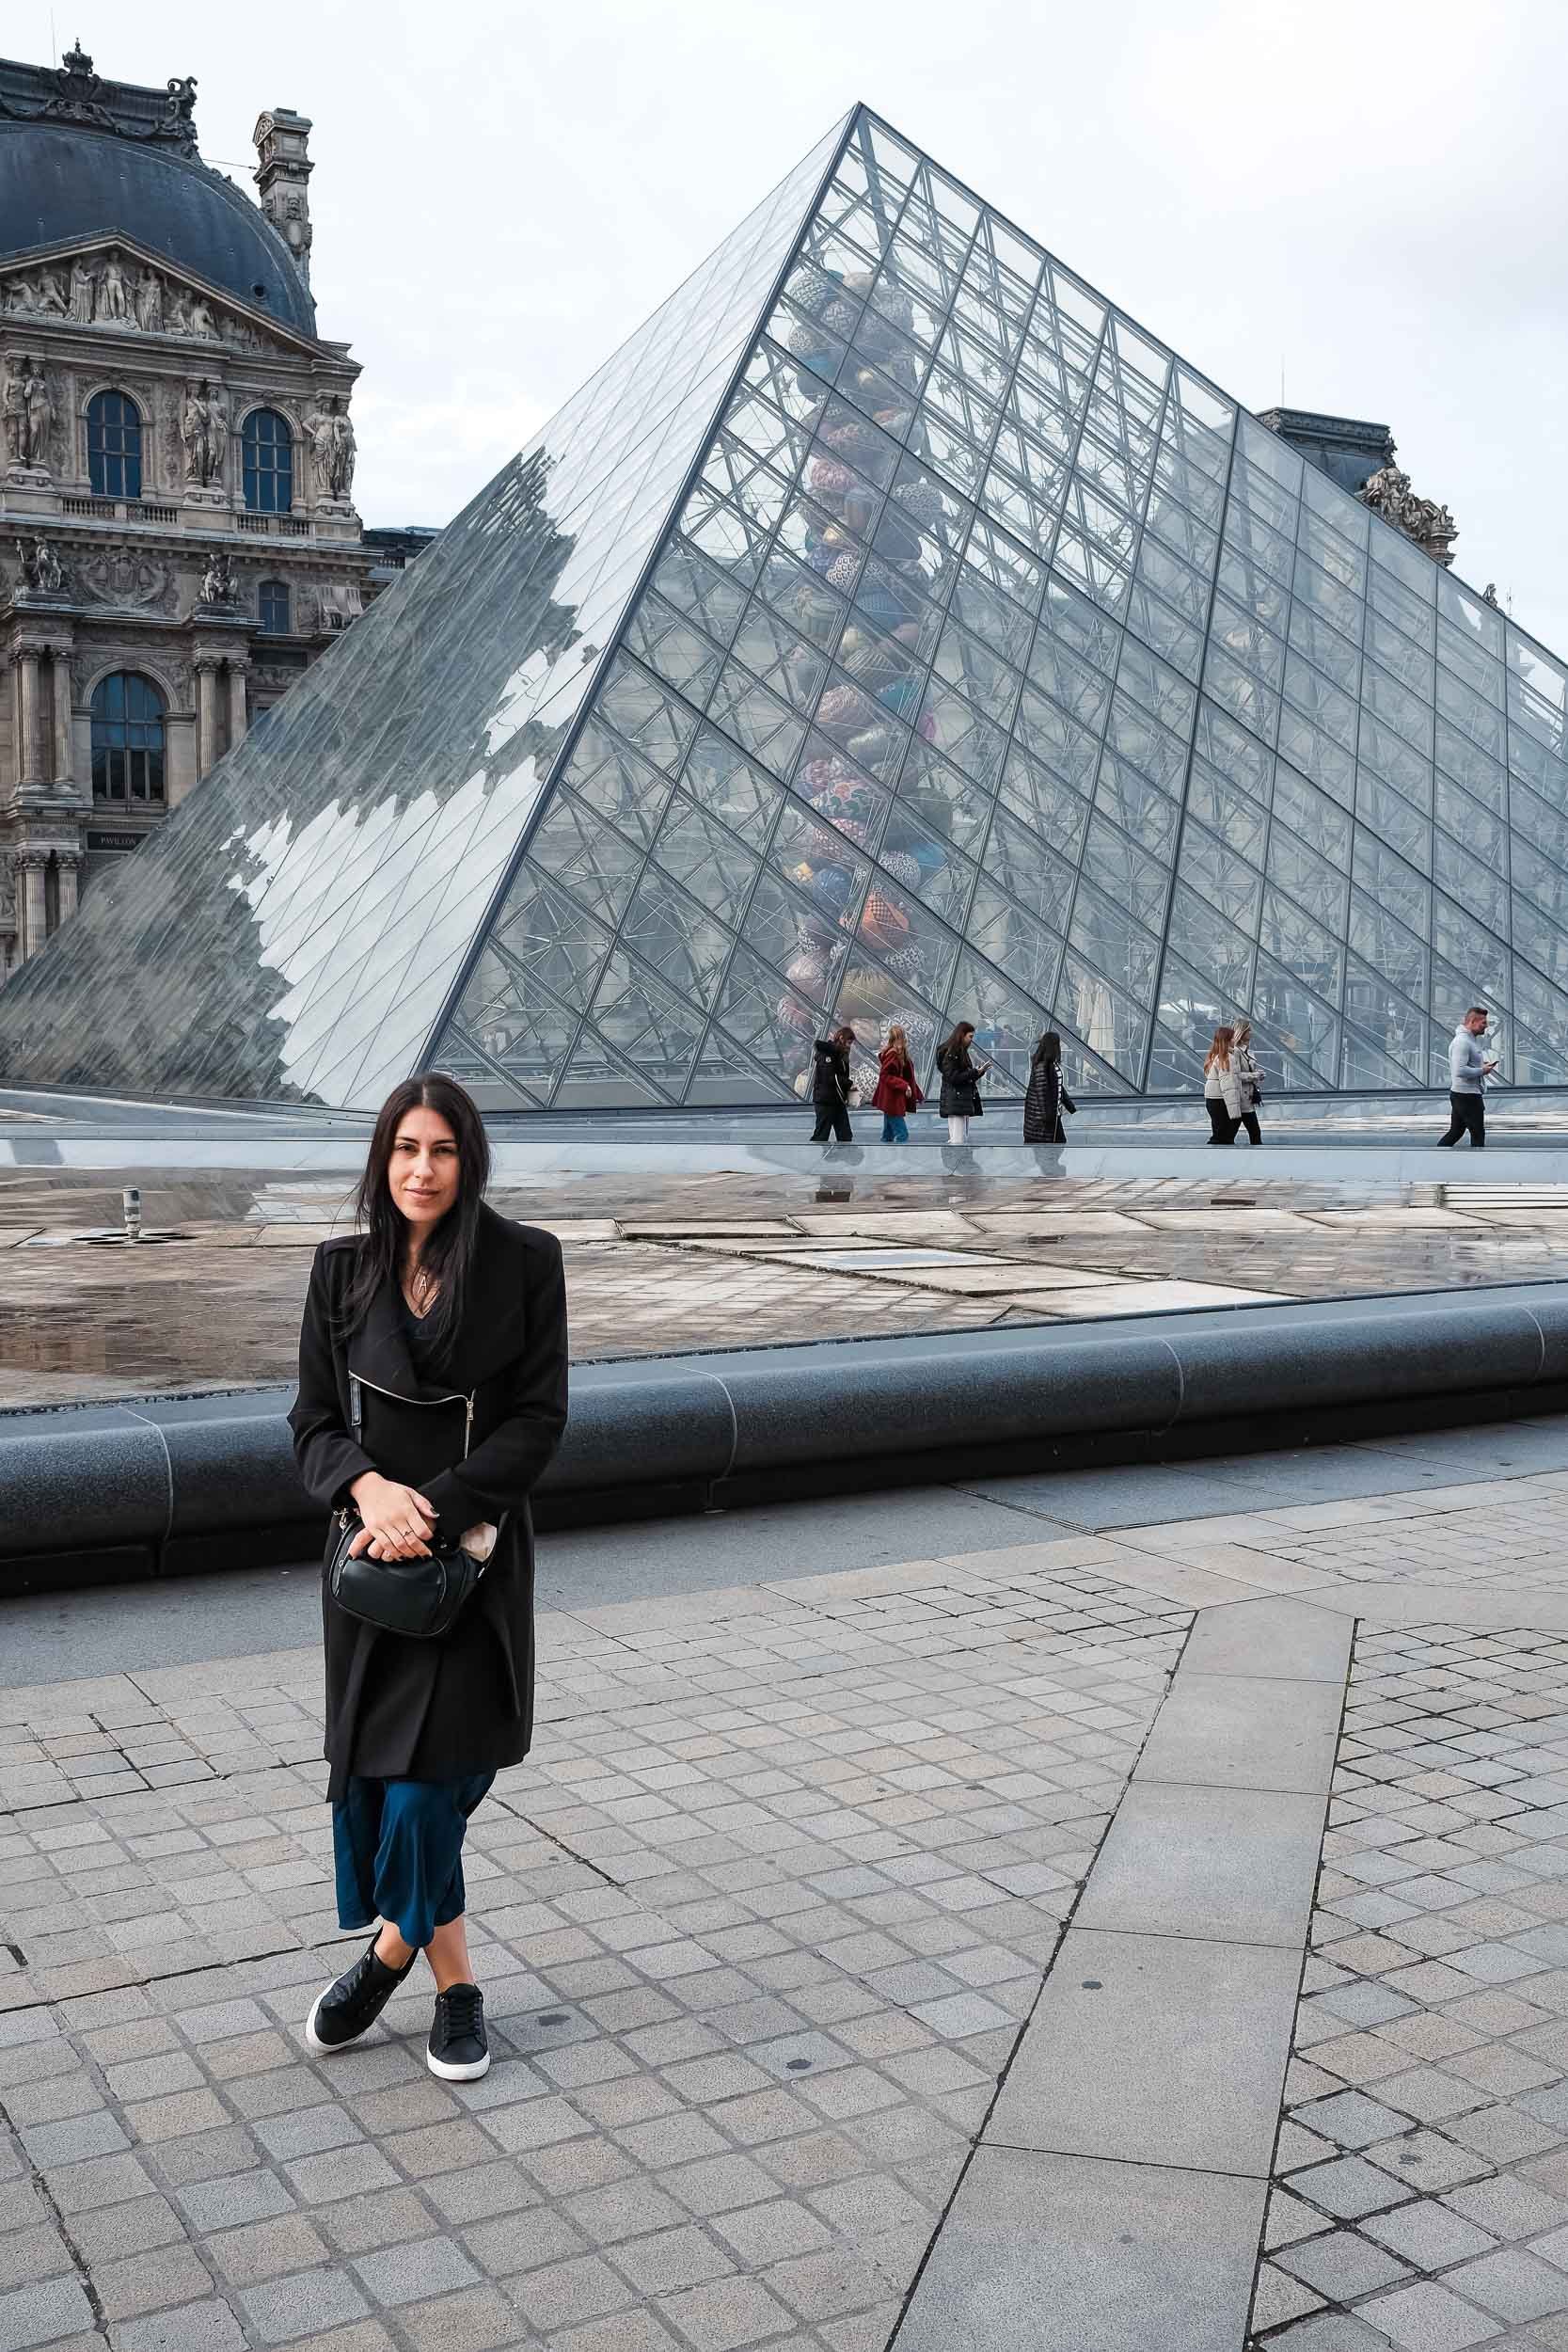 Outside the Louvre, Paris, taken on Fujifilm X100V by Rob Swan